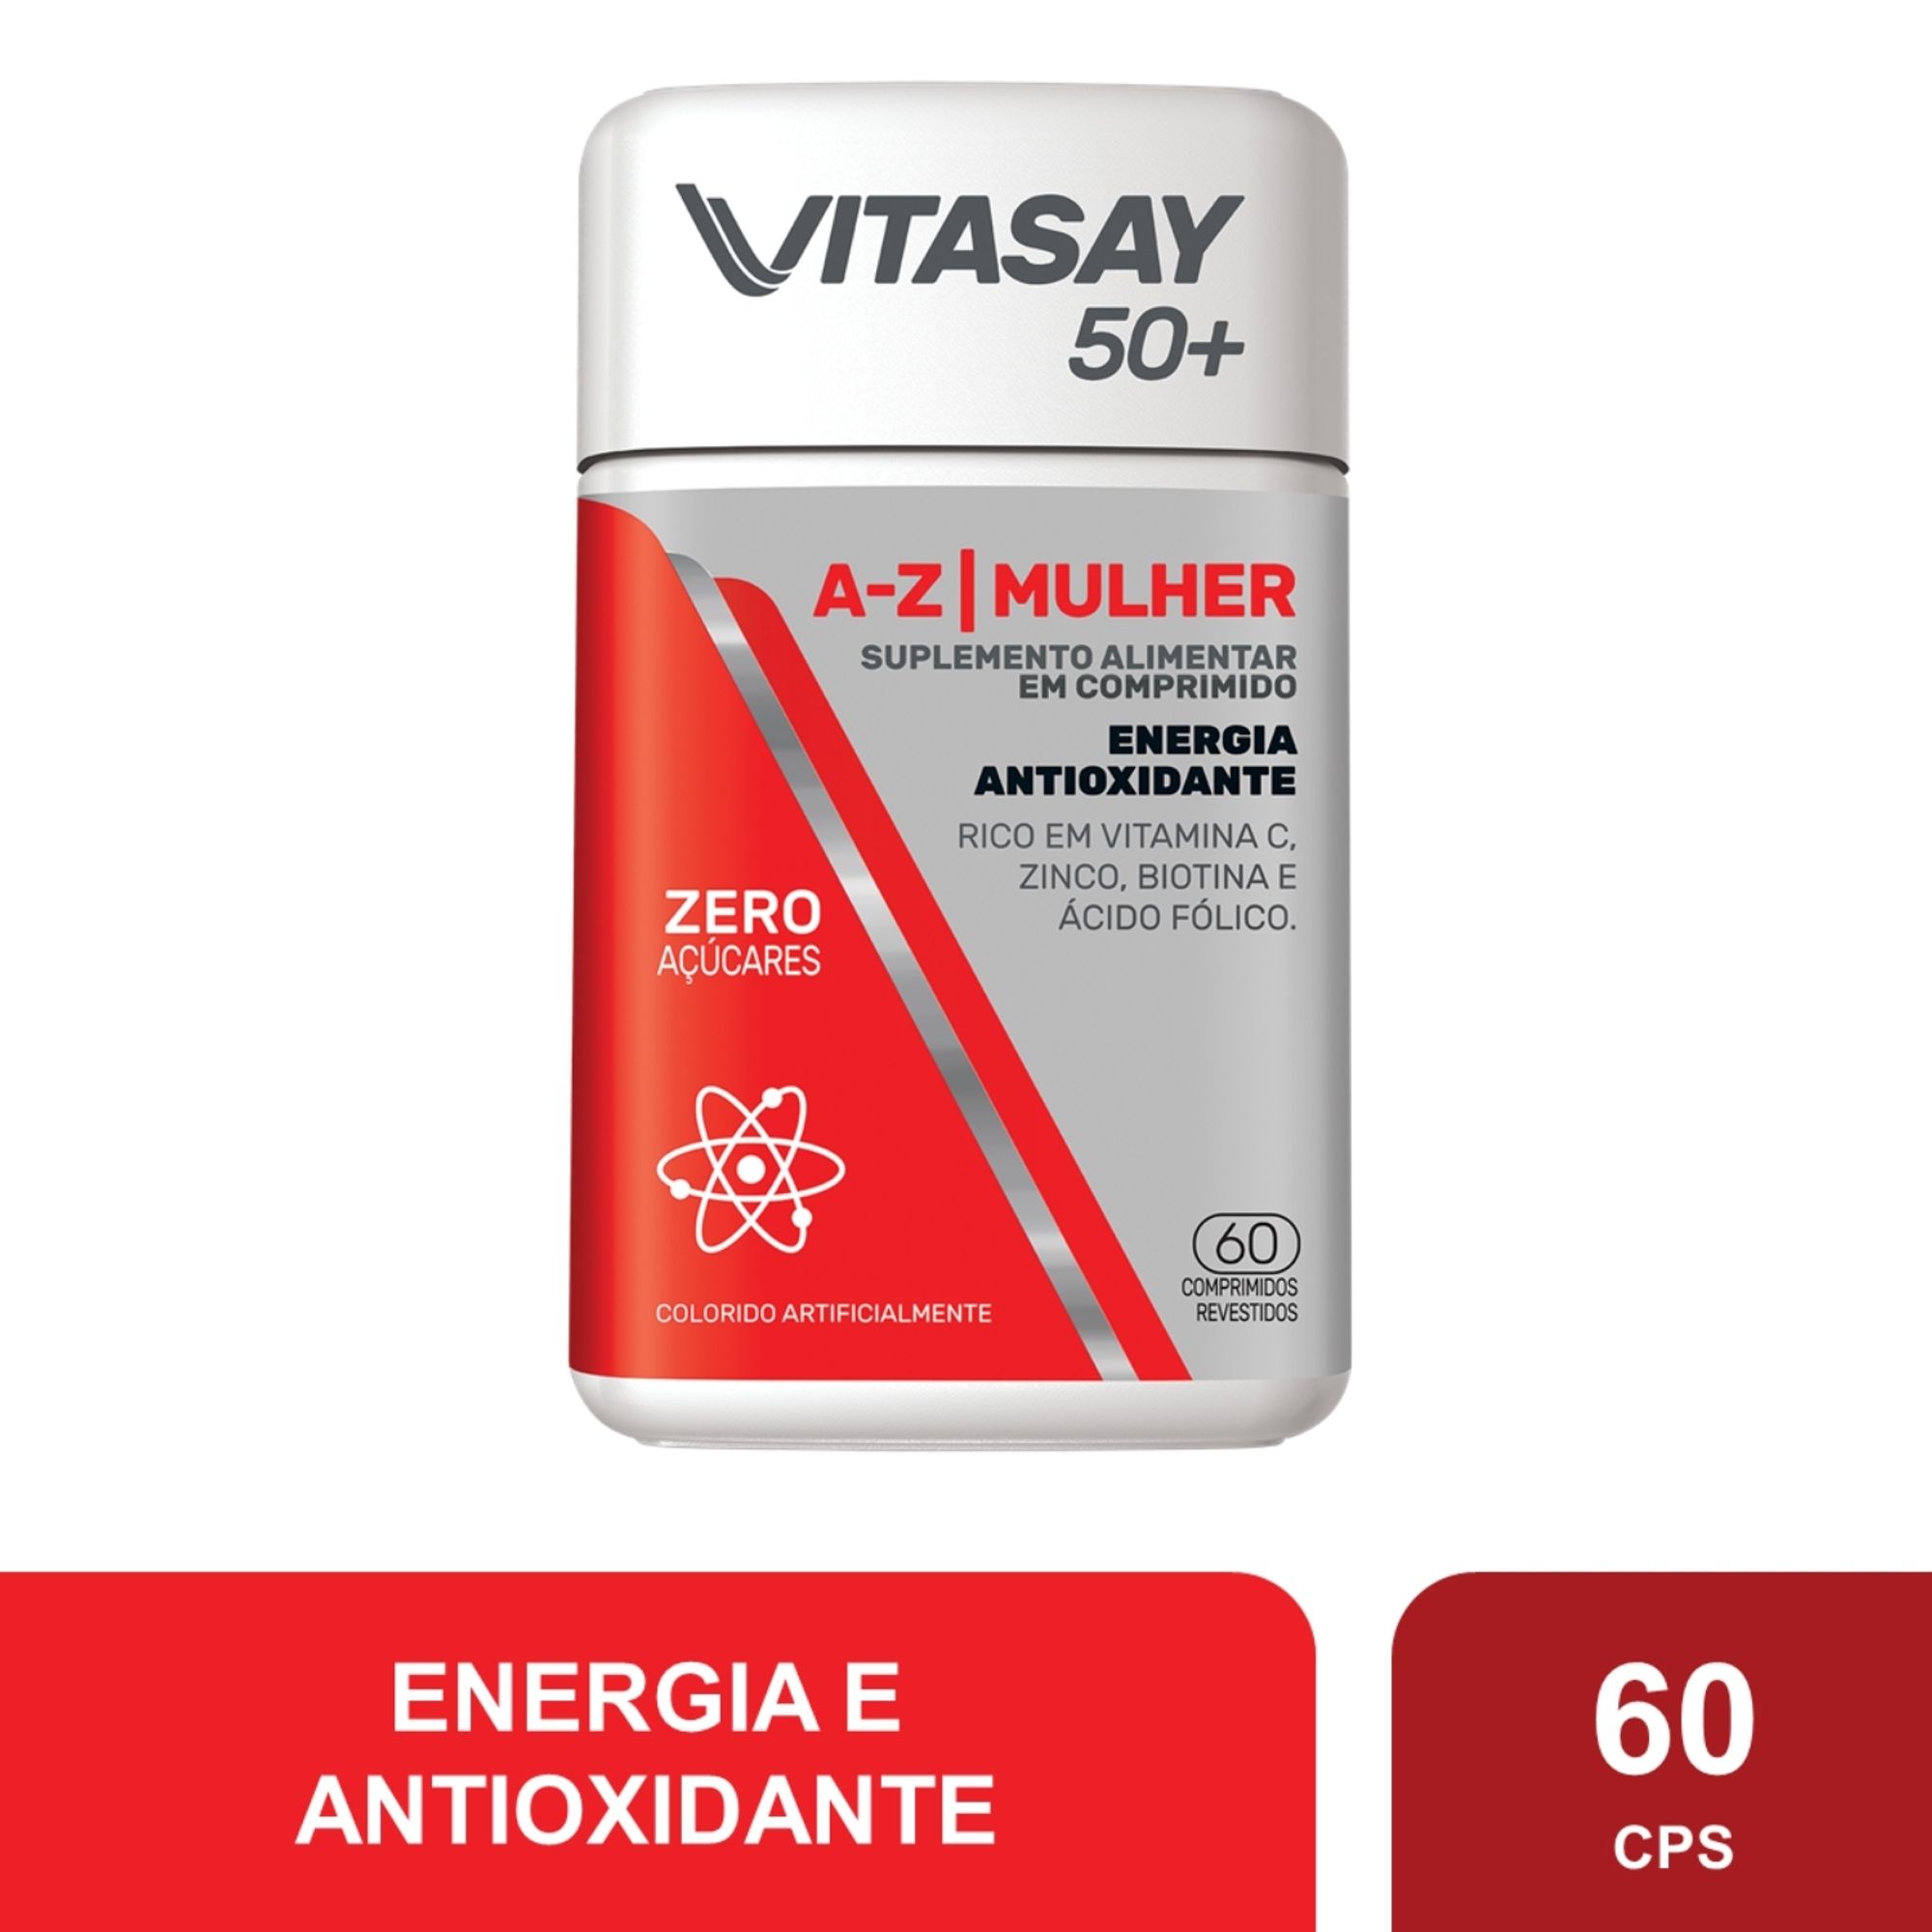 Vitasay 50+ A-Z Mulher 60 Comprimidos Revestidos